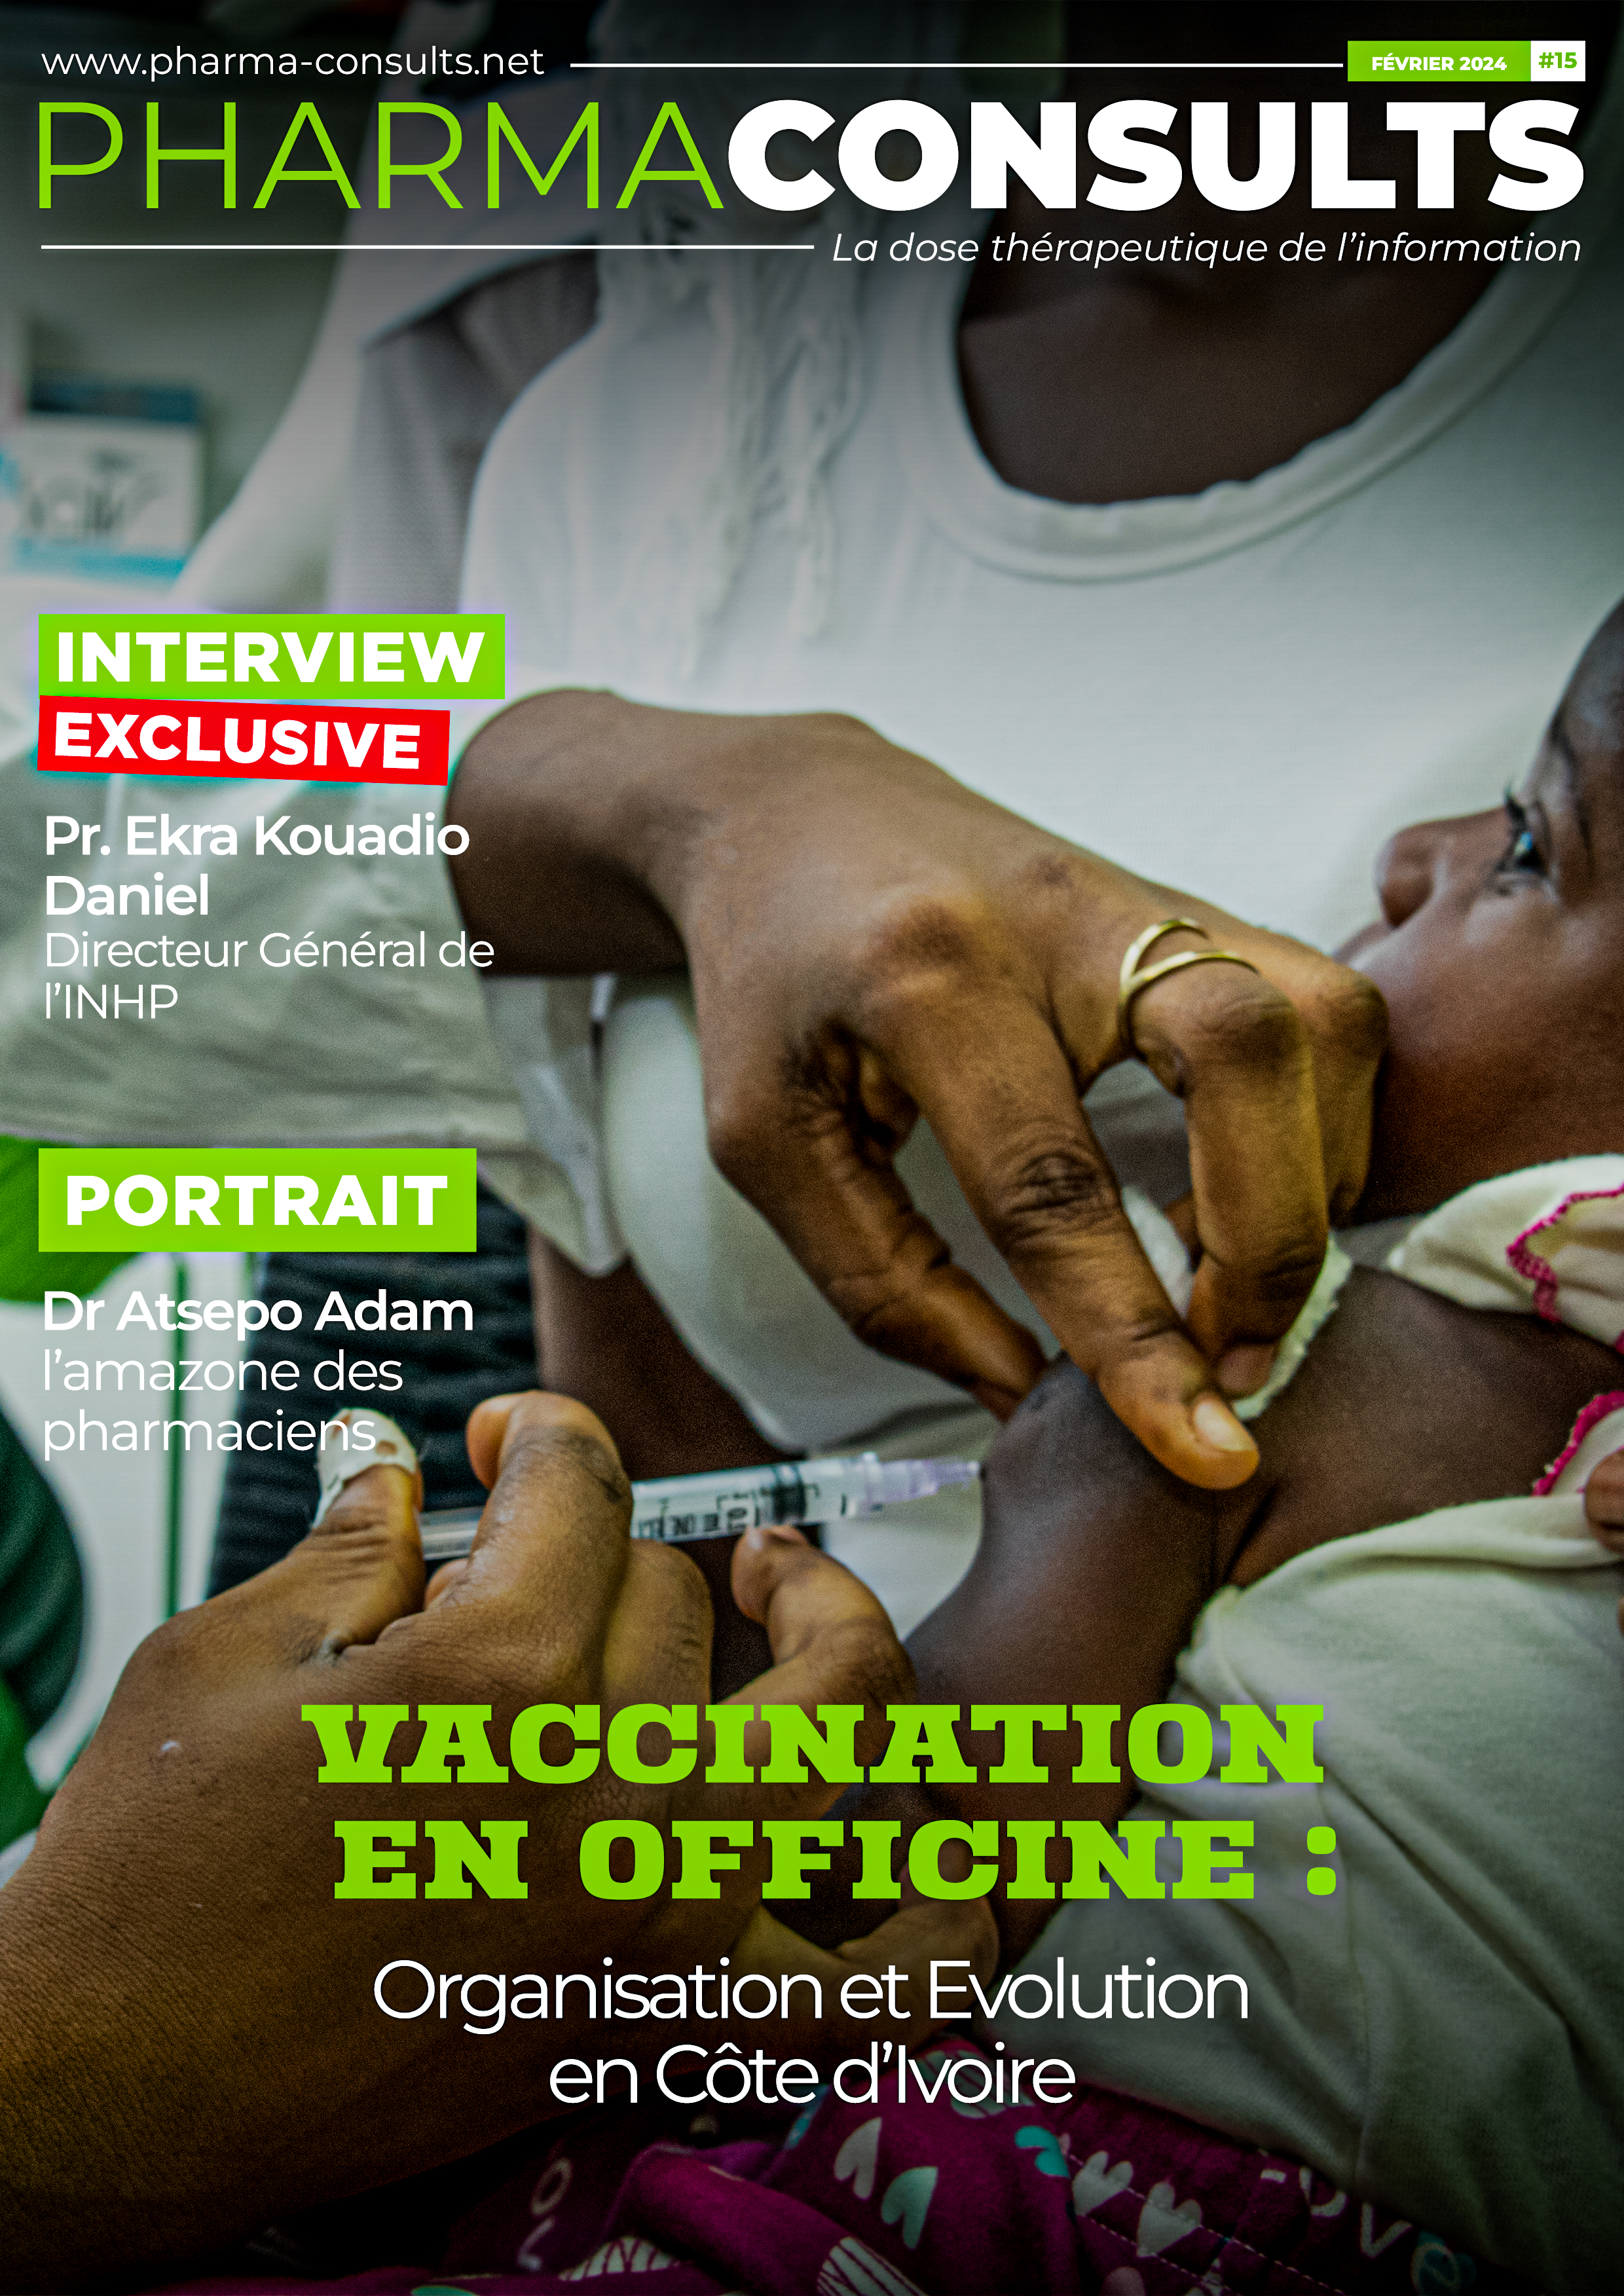 VACCINATION EN OFFICINE : Organisation et Evolution en Côte d'Ivoire